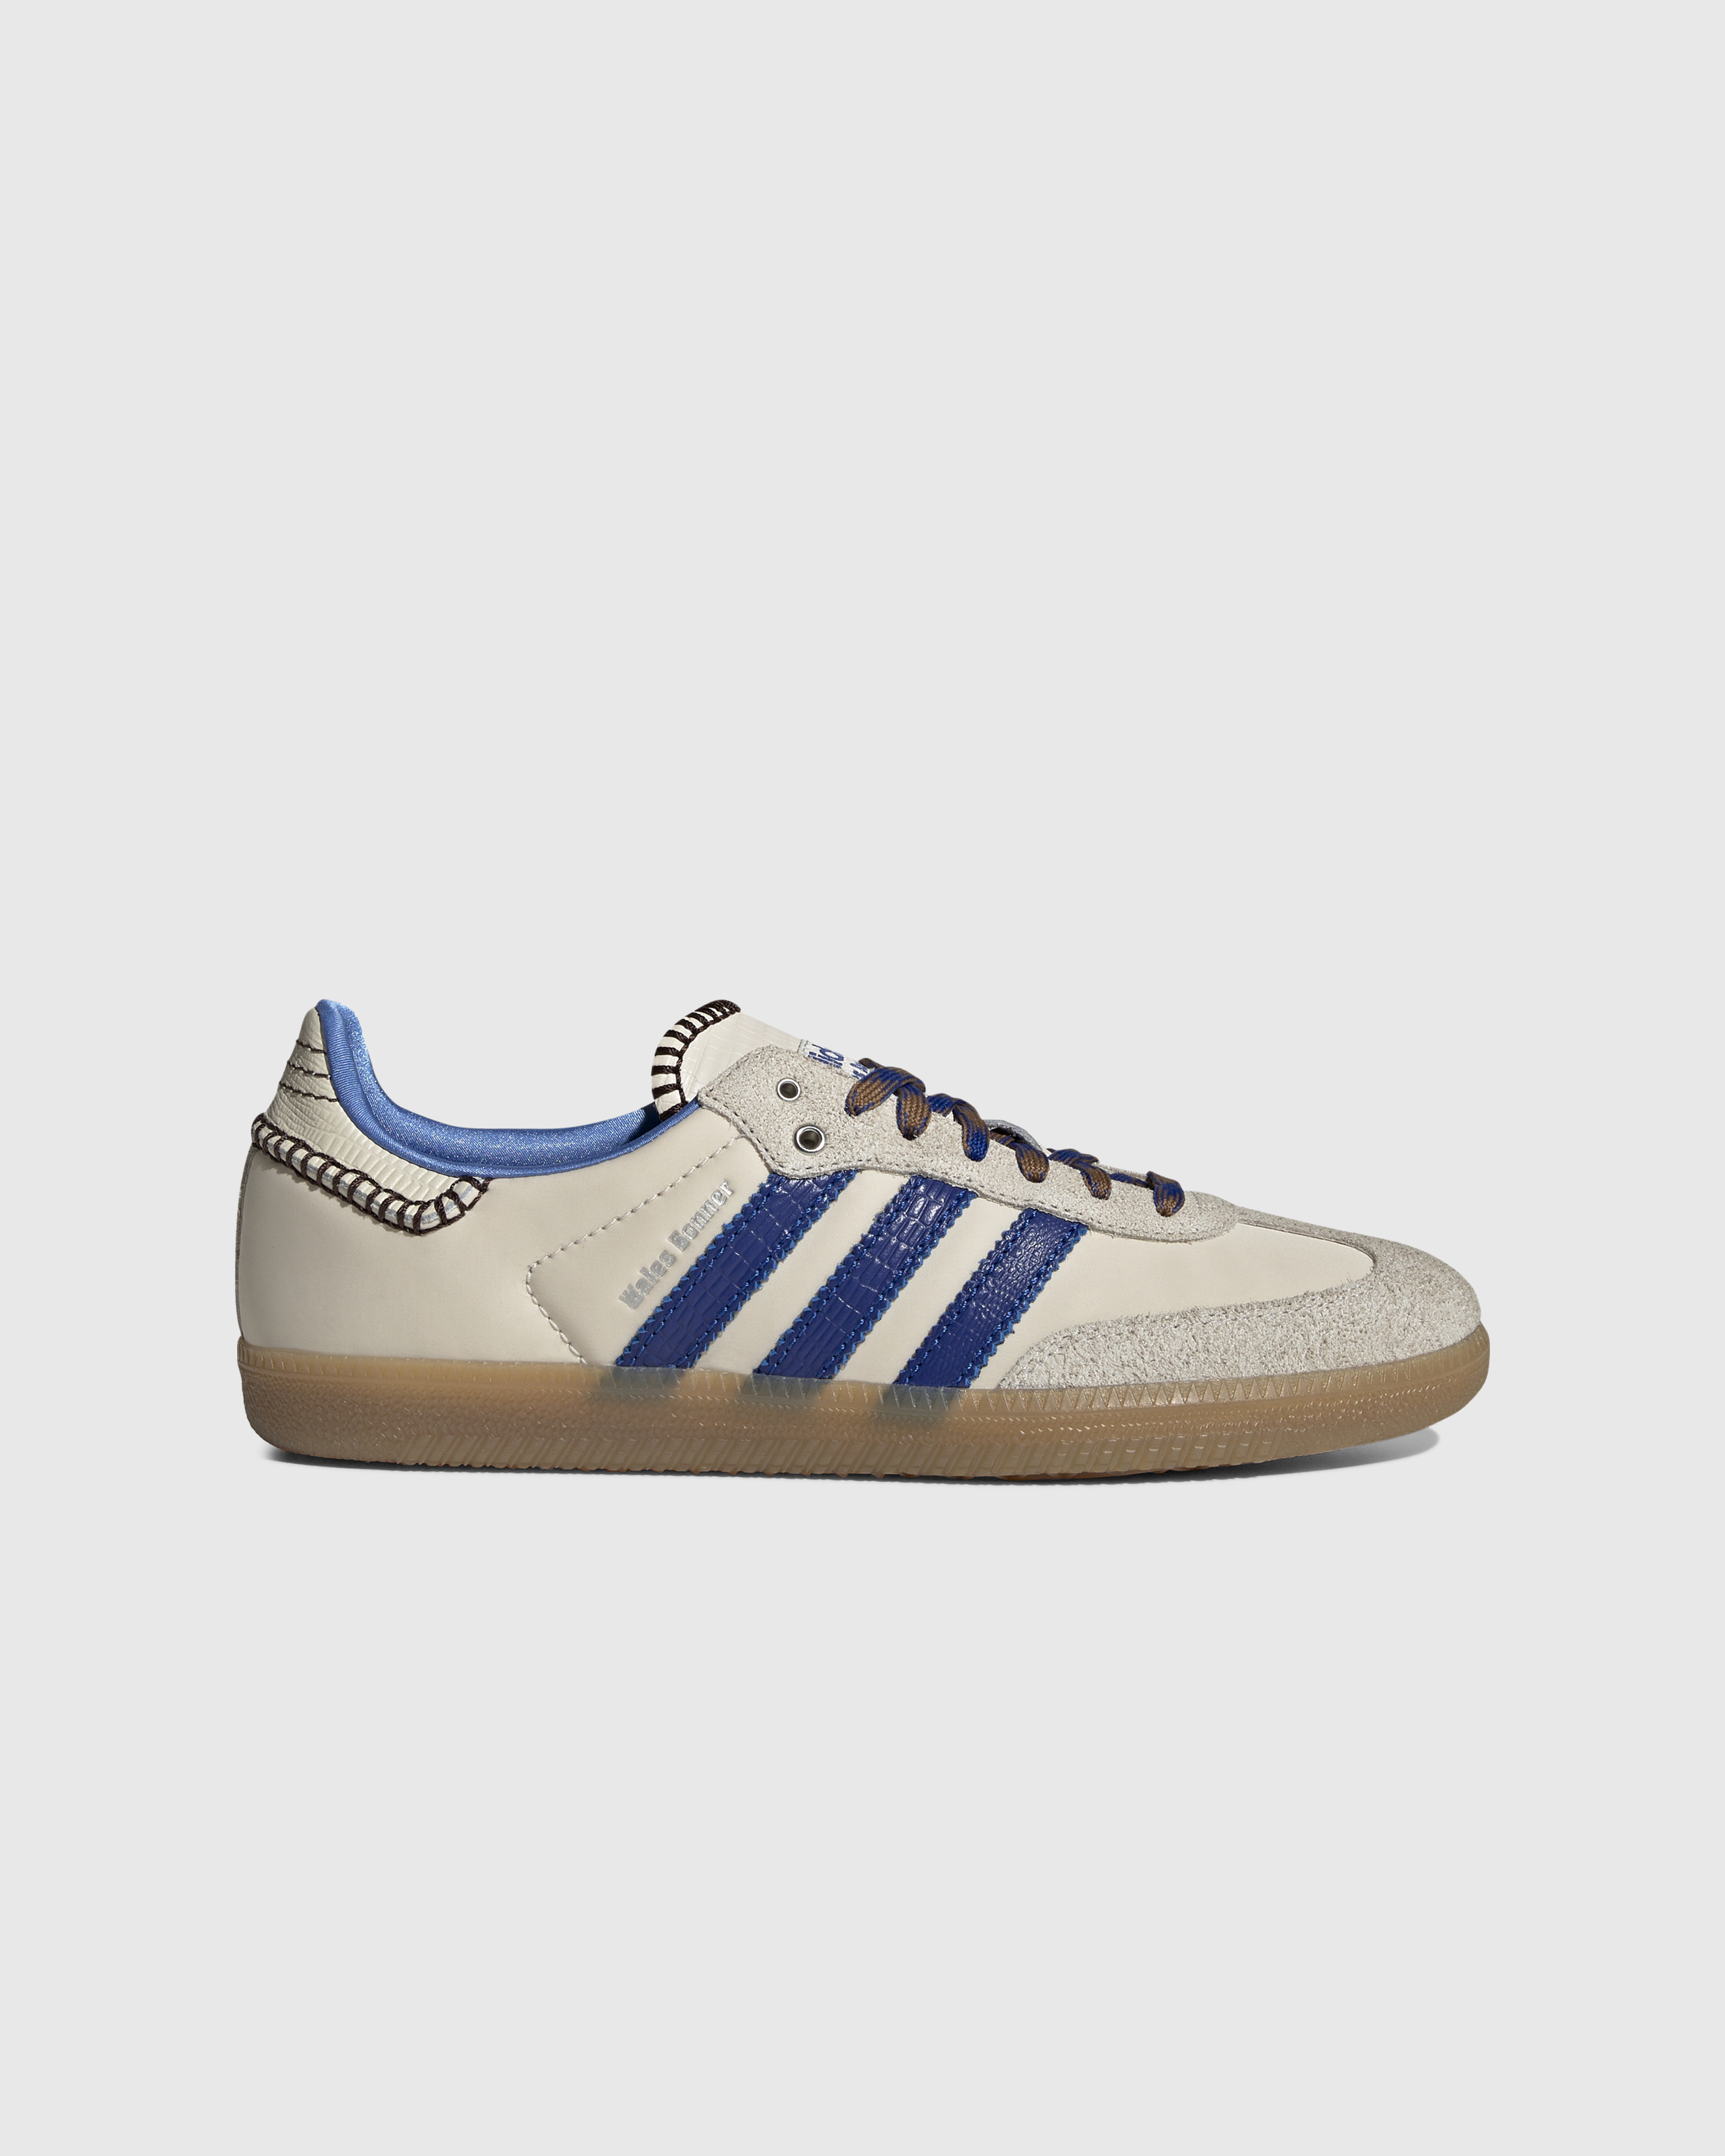 Adidas x Wales Bonner – Samba Cream/Blue - Low Top Sneakers - Beige - Image 1